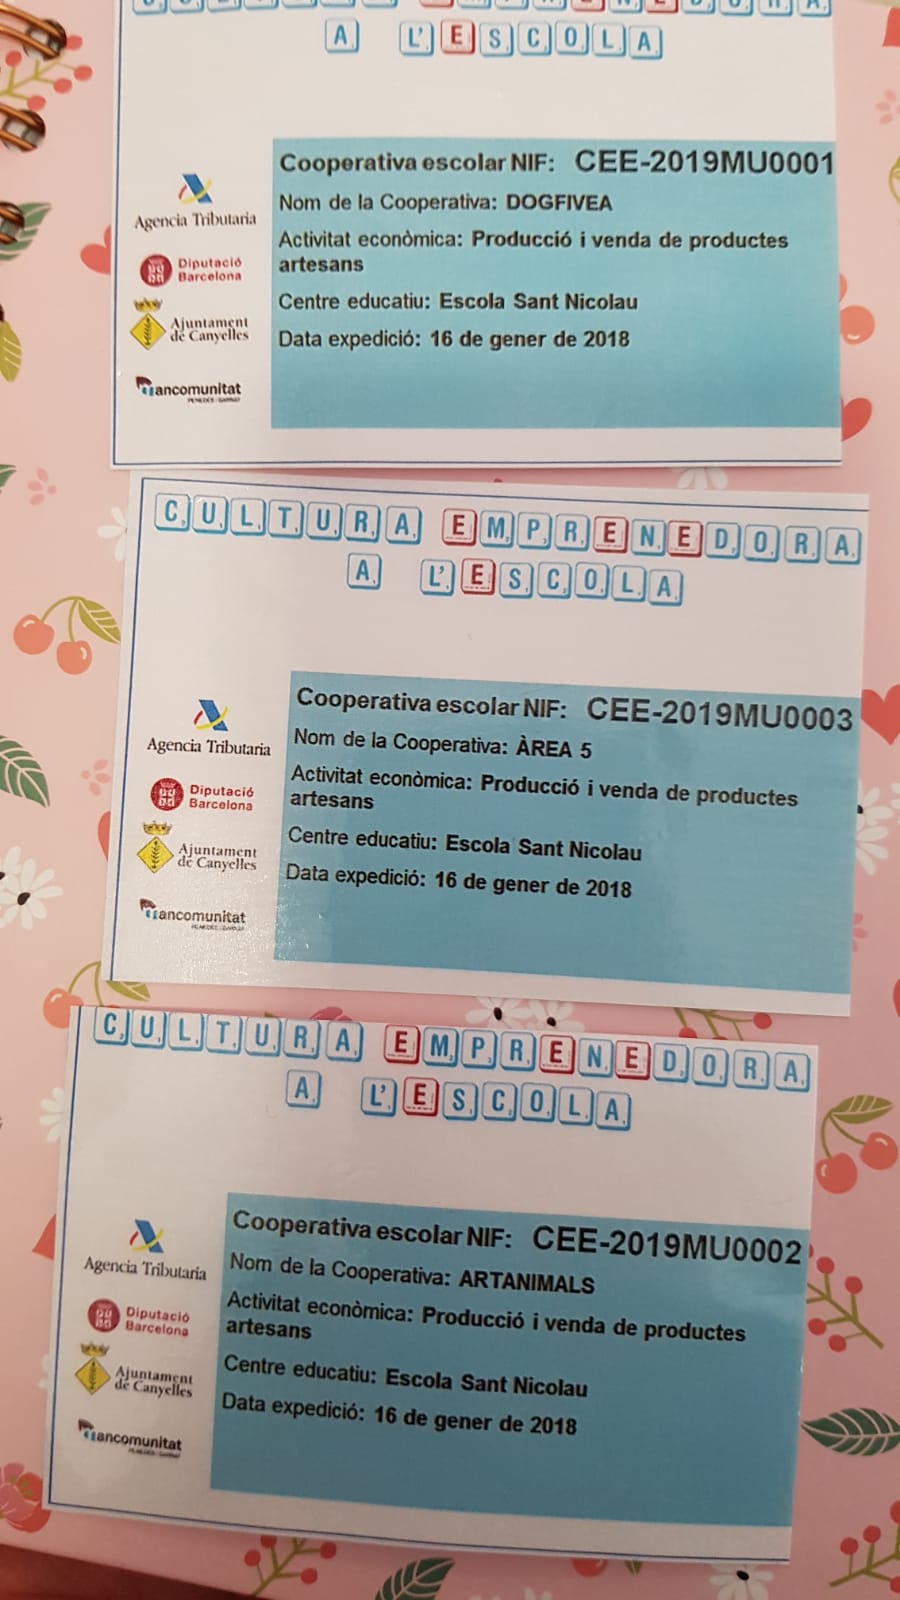 2019 16 01 Cuemecooperatives